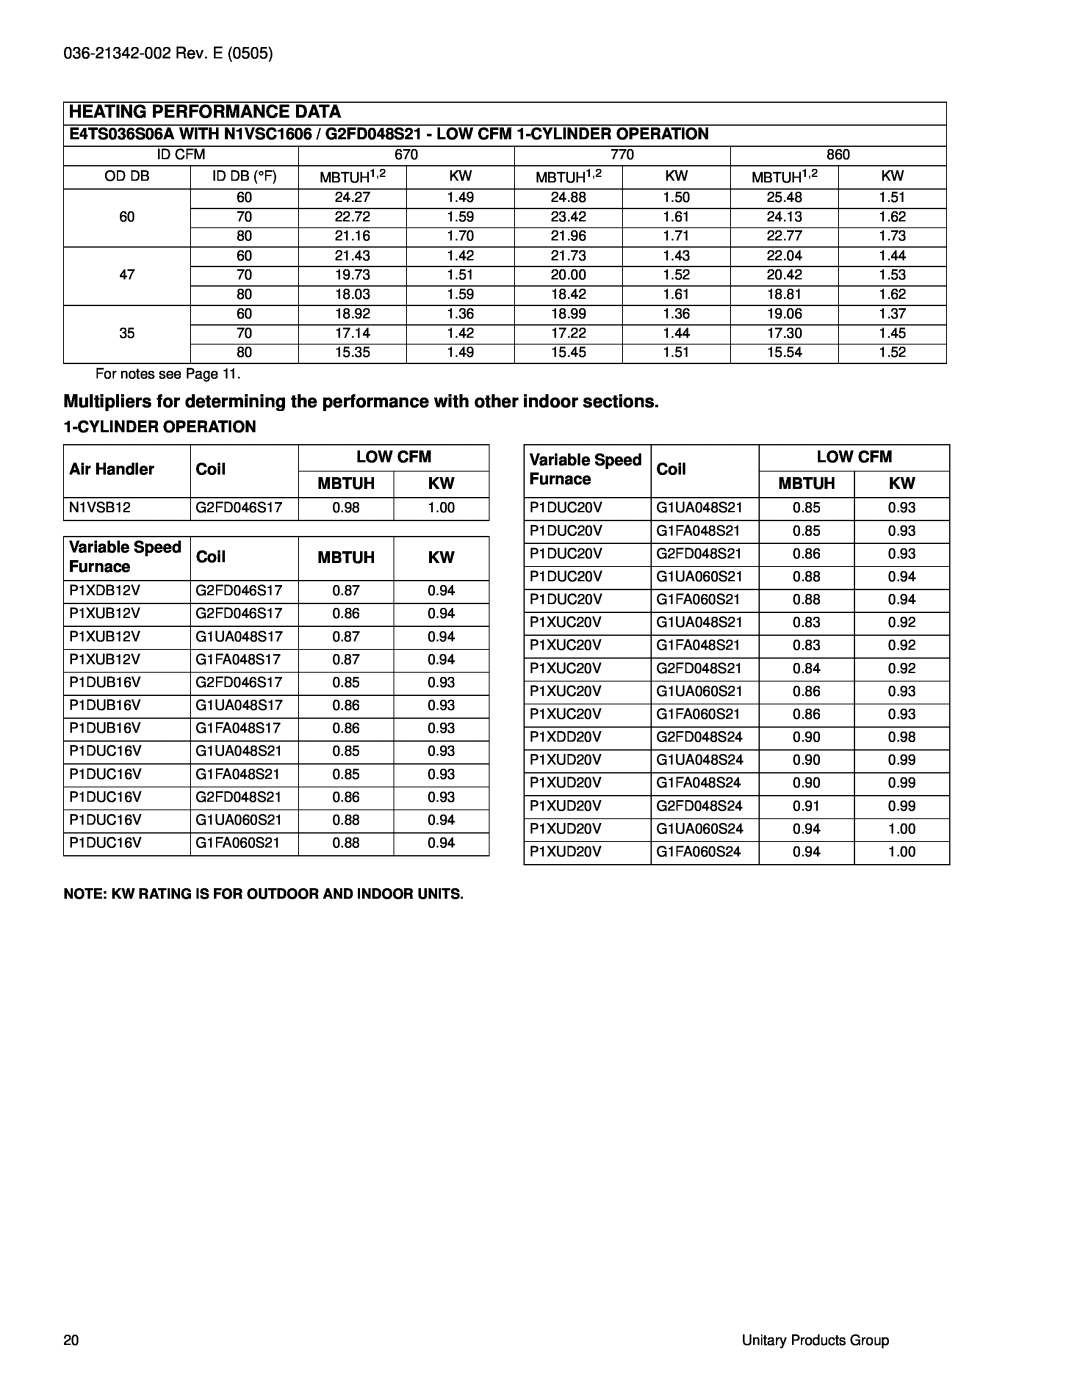 York E4TS030 THRU 060 warranty Heating Performance Data, Id Cfm 